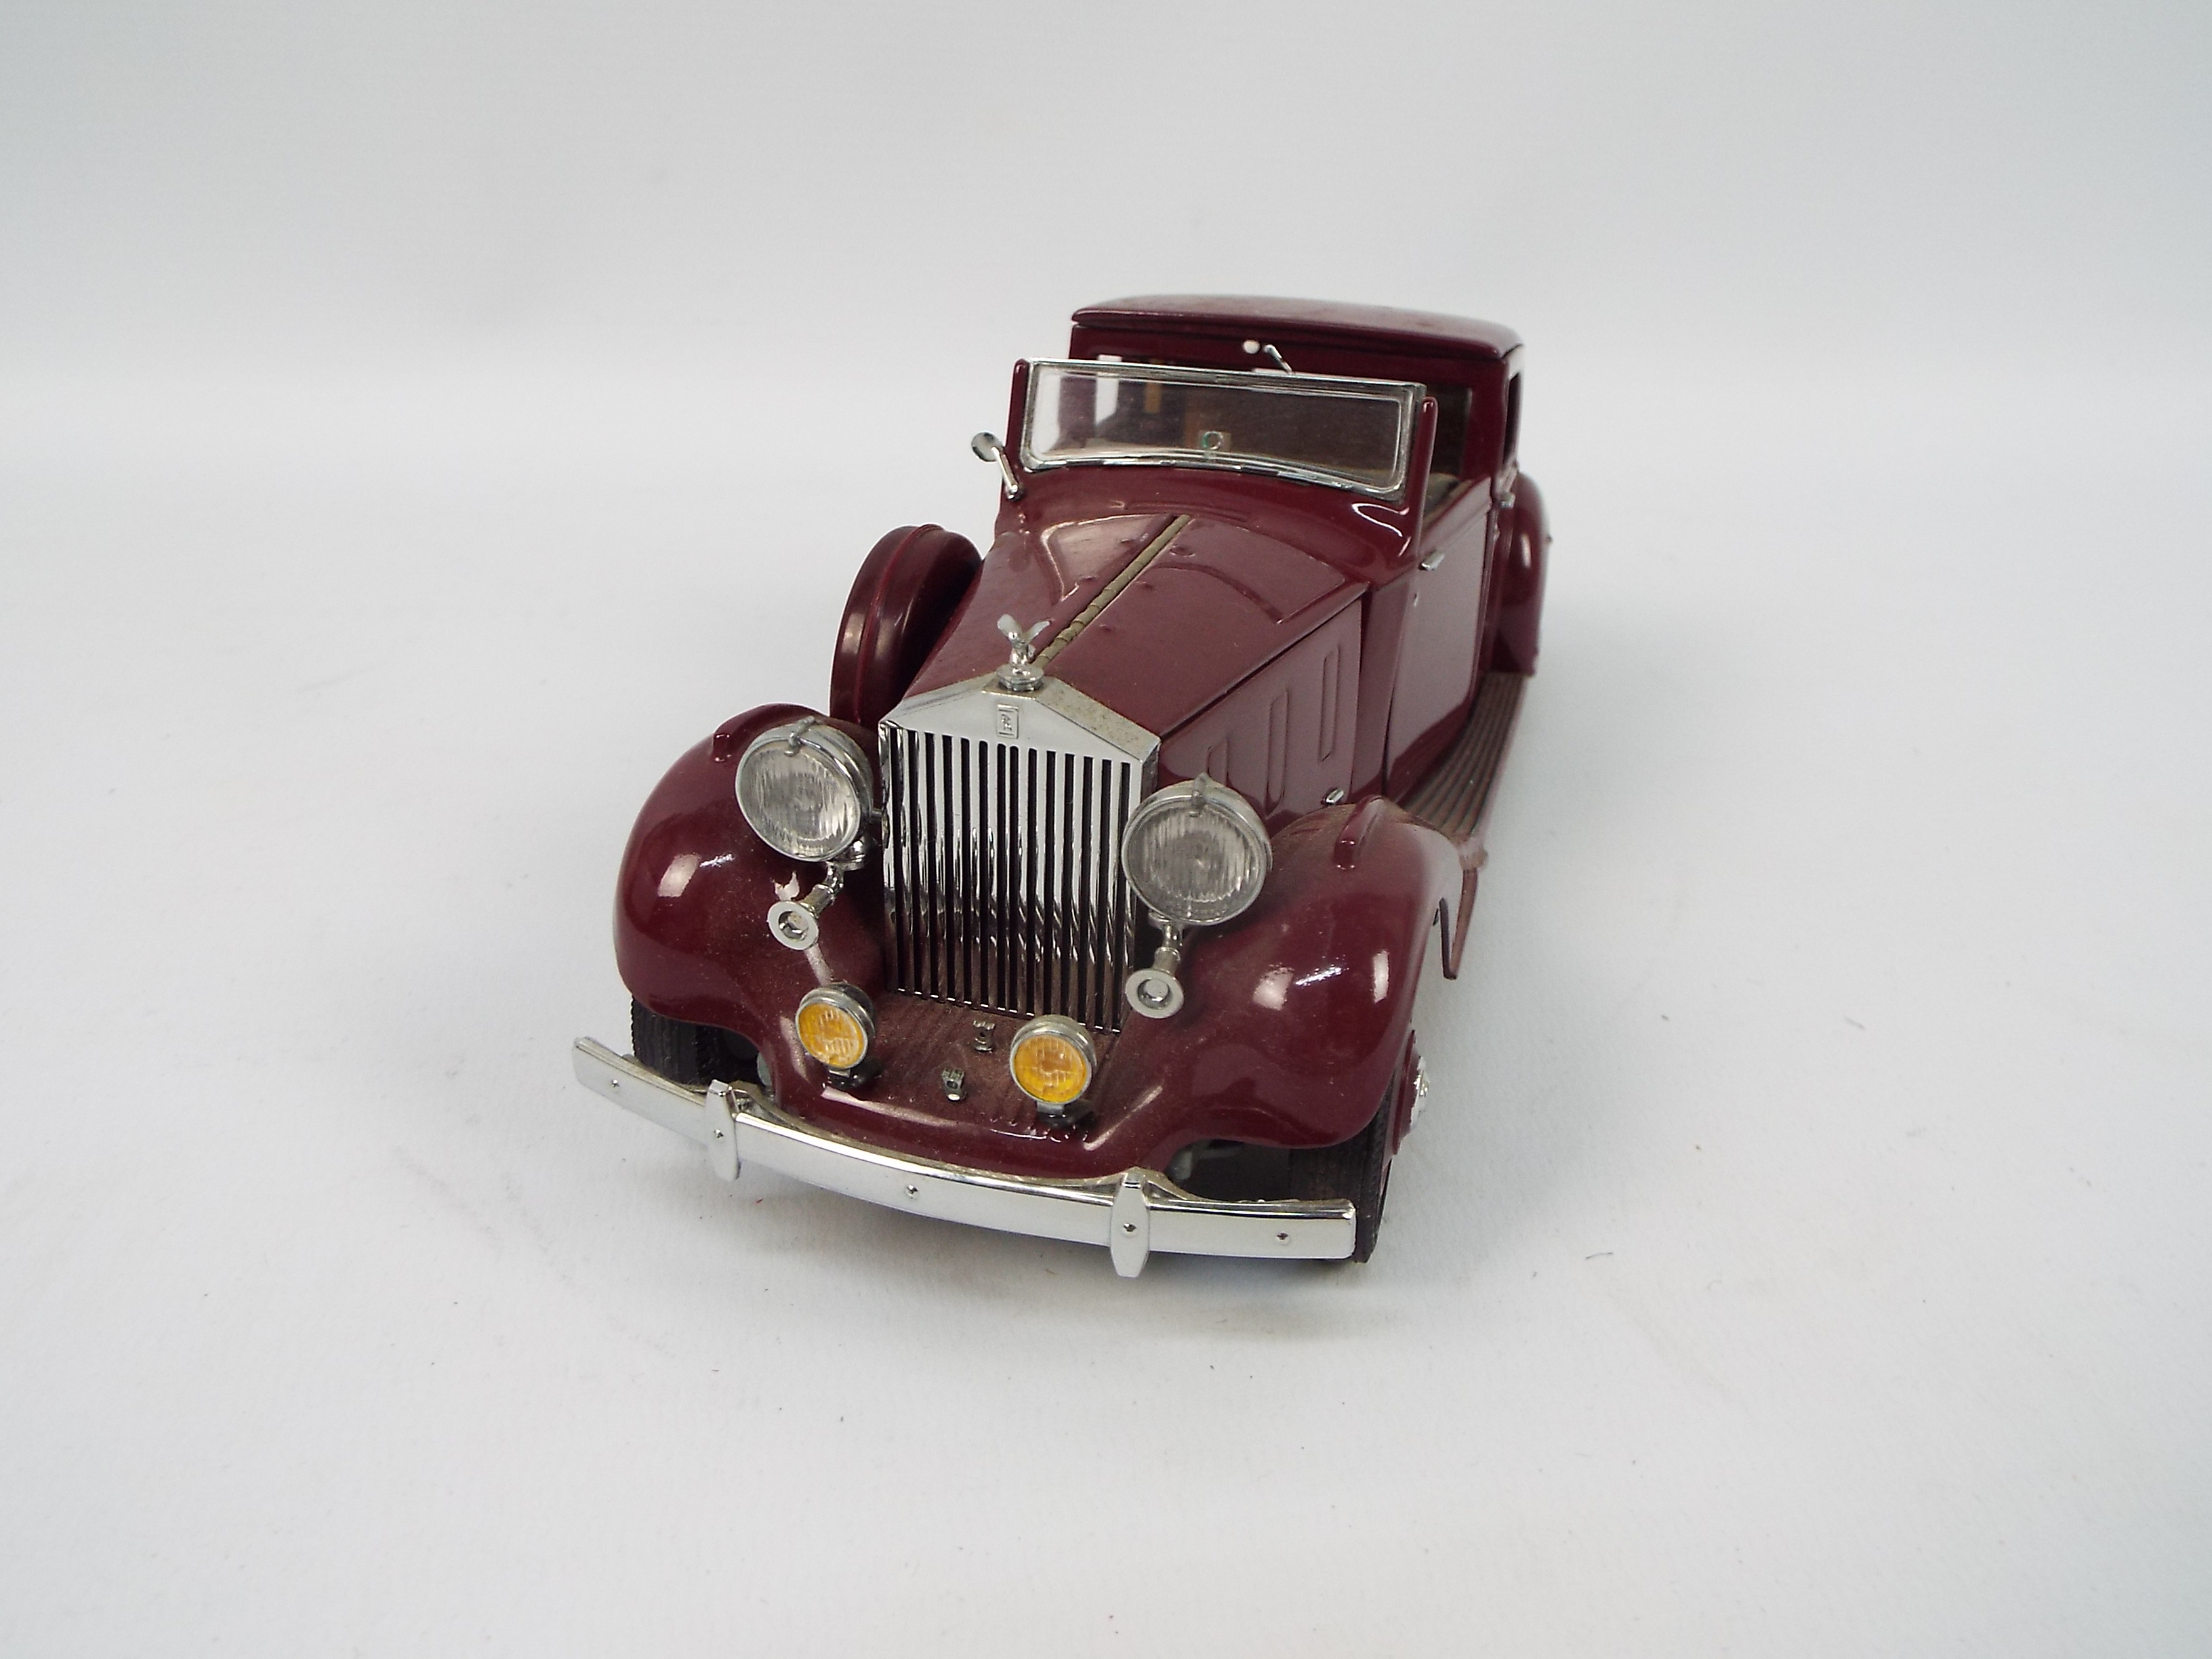 Danbury Mint - A boxed Danbury Mint diecast 1:24 scale 1938 Rolls Royce Phantom III. - Image 3 of 6